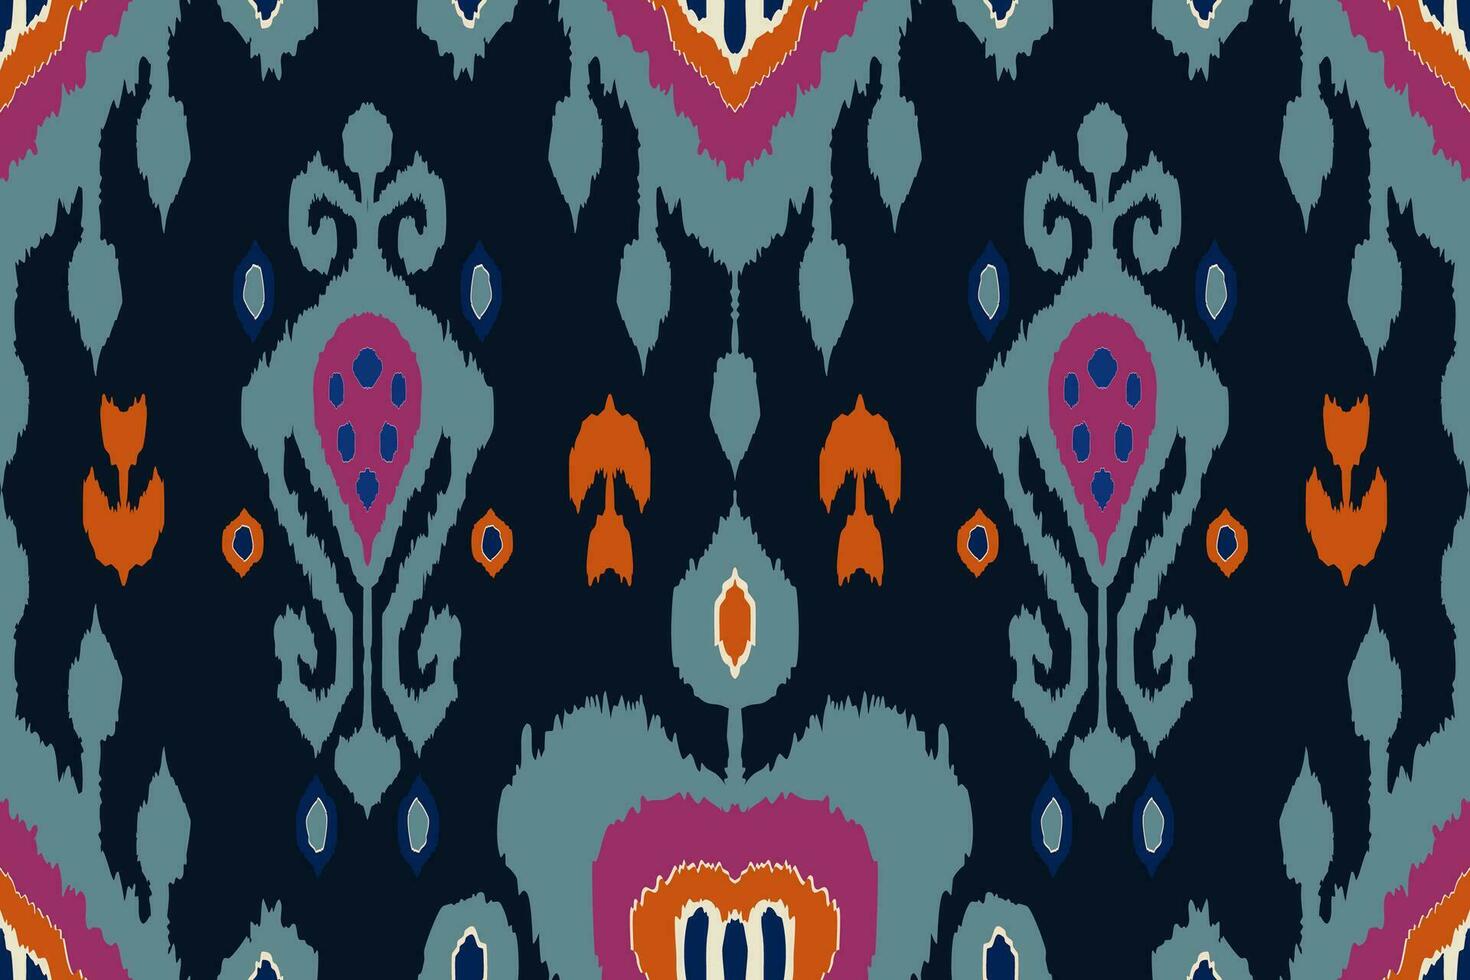 ikat tribal indiano desatado padronizar. étnico asteca tecido tapete mandala enfeite nativo boho divisa têxtil.geométrico africano americano oriental tradicional vetor ilustrações. bordado estilo.